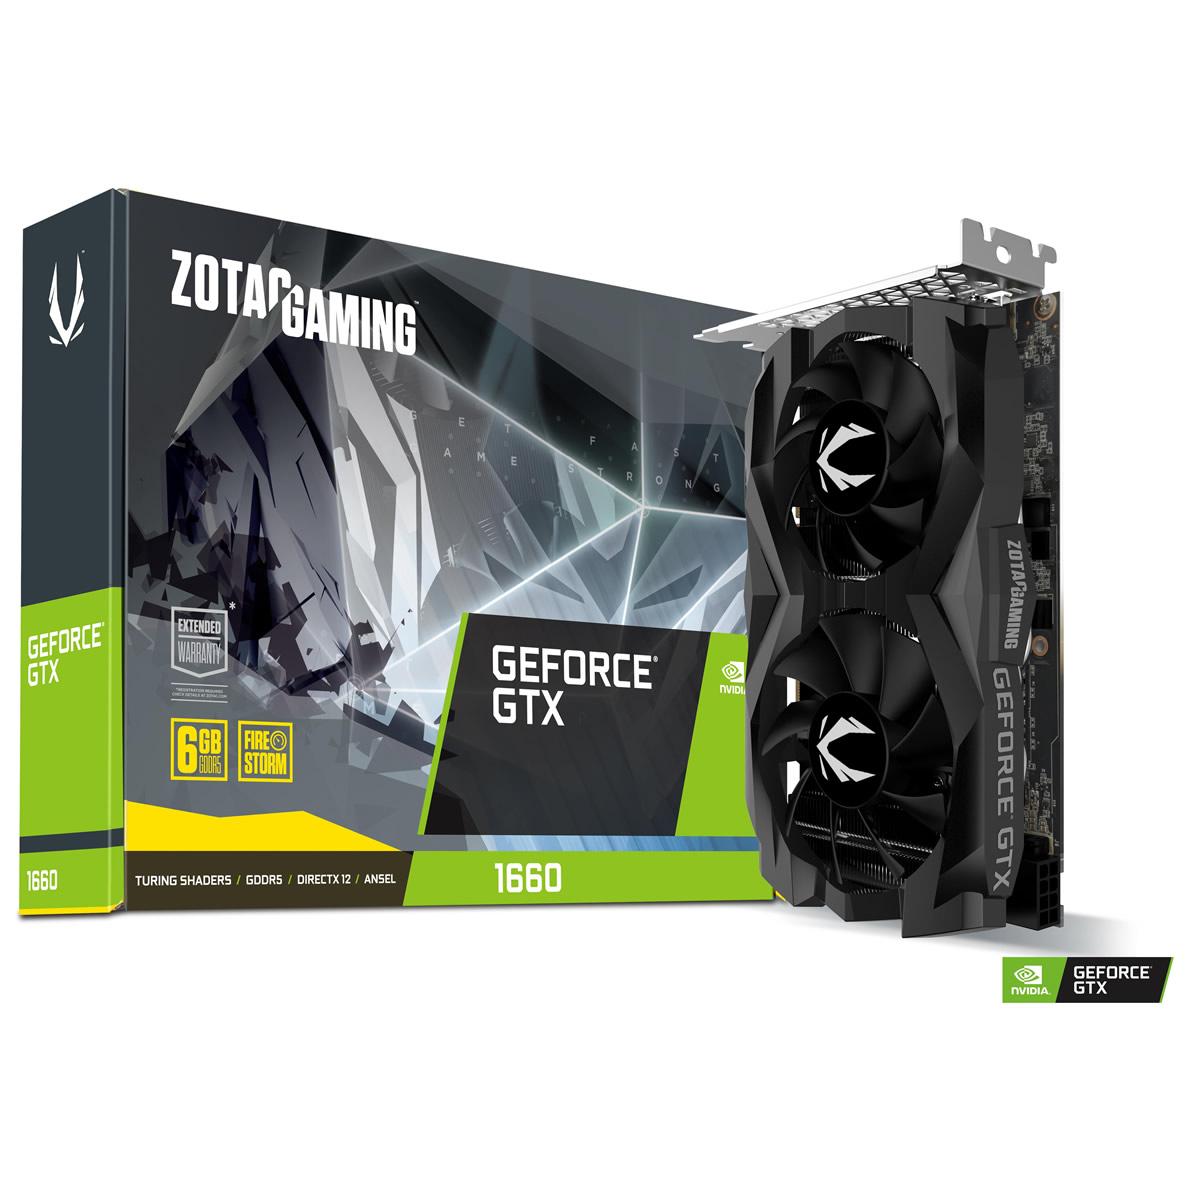 Zotac GeForce GTX 1660 6 GB Gaming